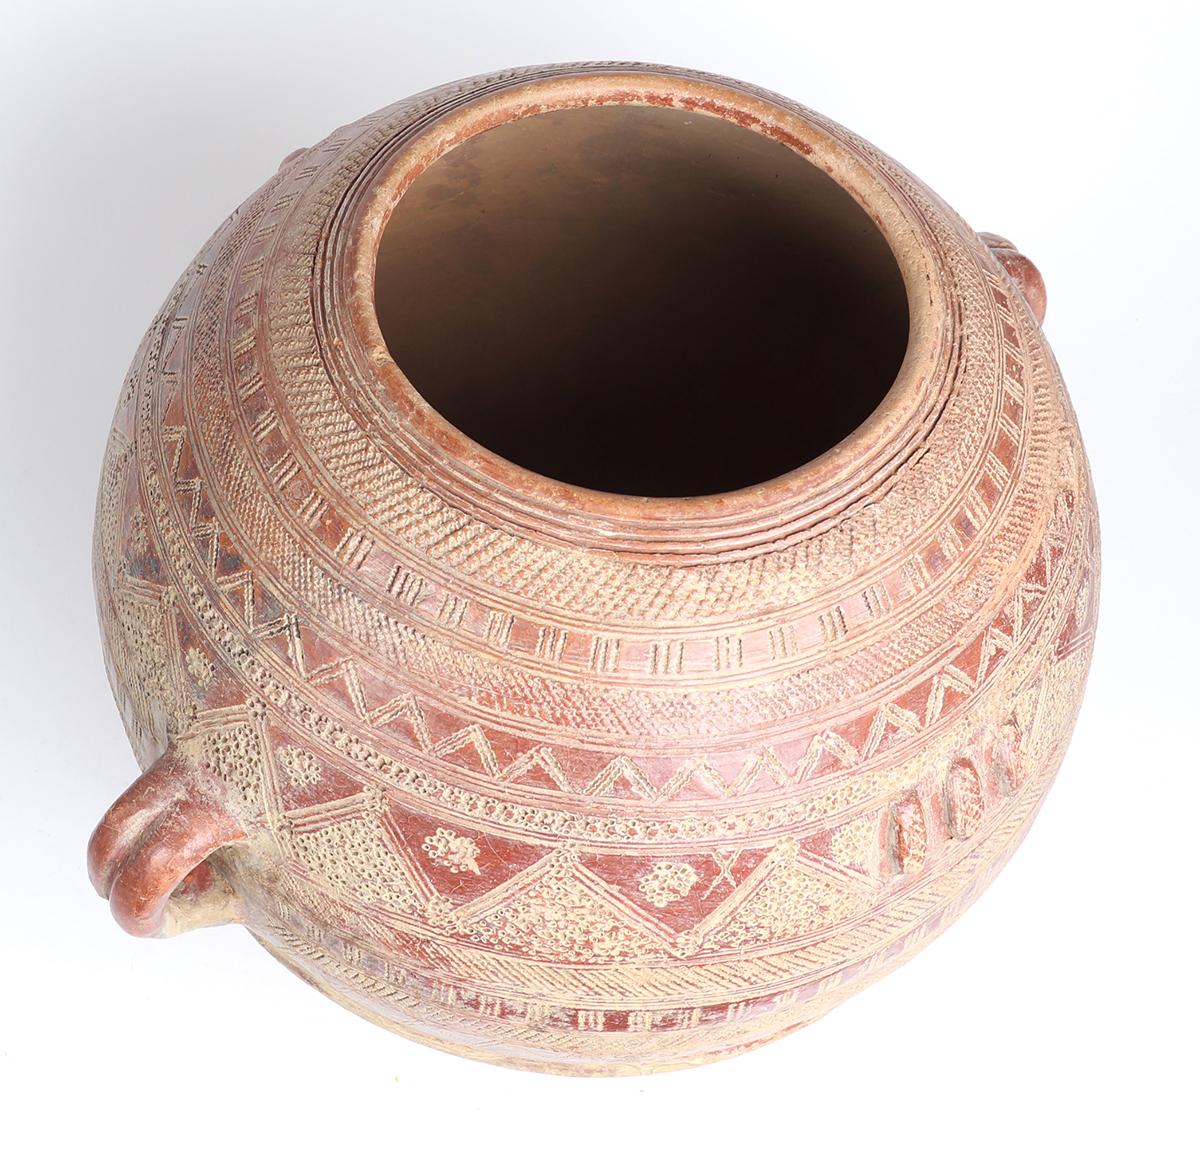 African Decorated Ceramic Storage Vessel